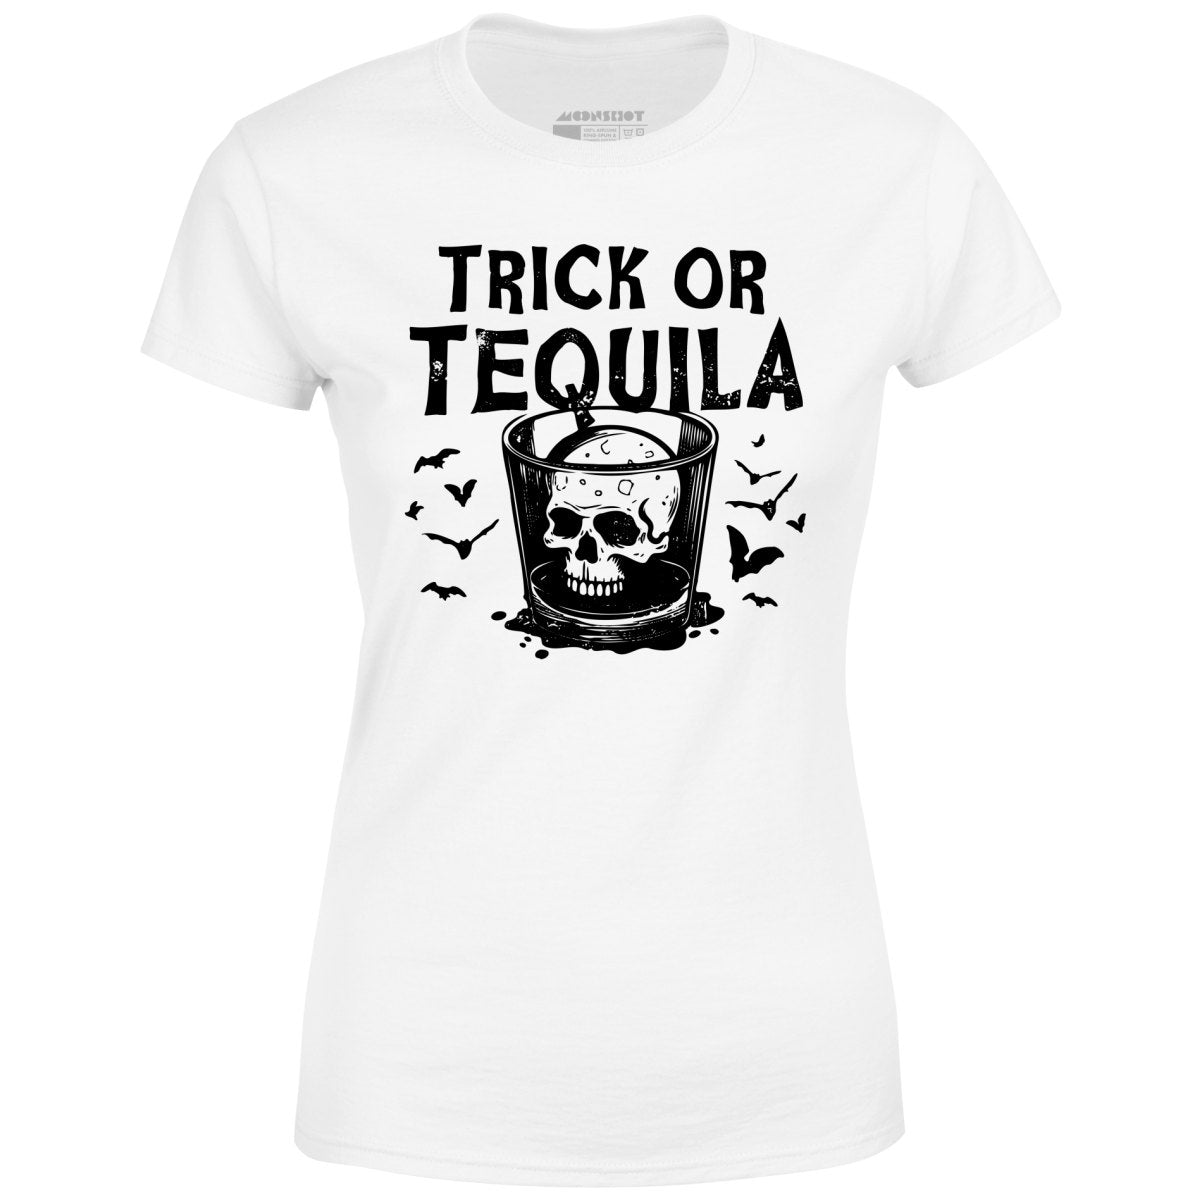 Trick or Tequila - Women's T-Shirt